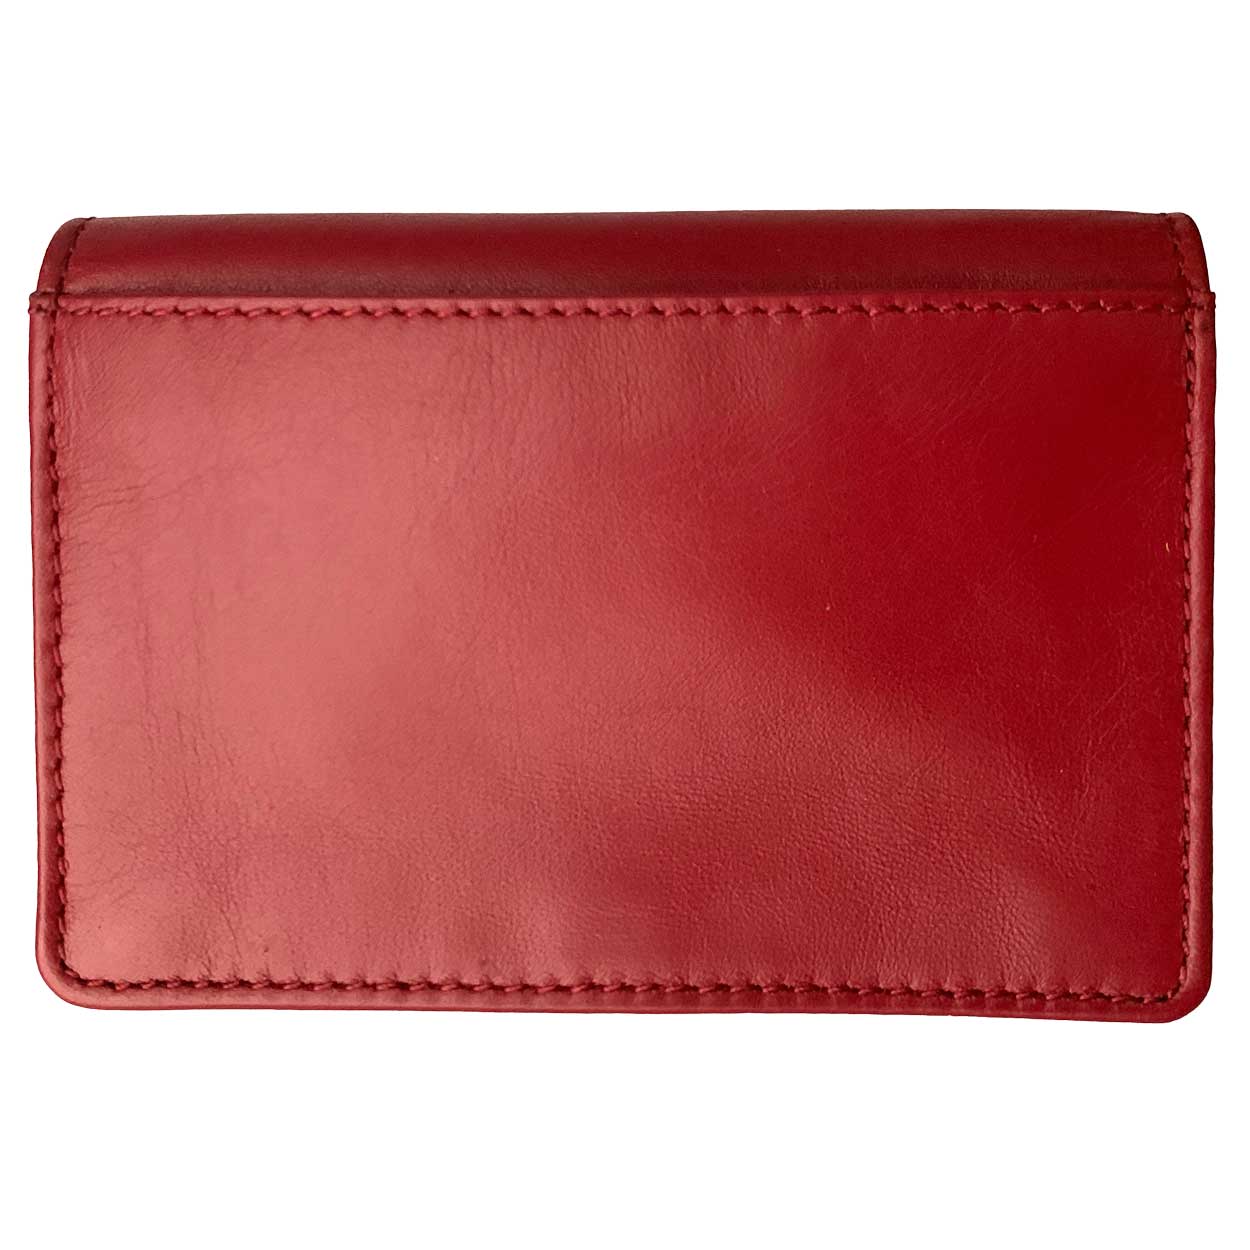 DiLoro Men's Slim Leather Wallet